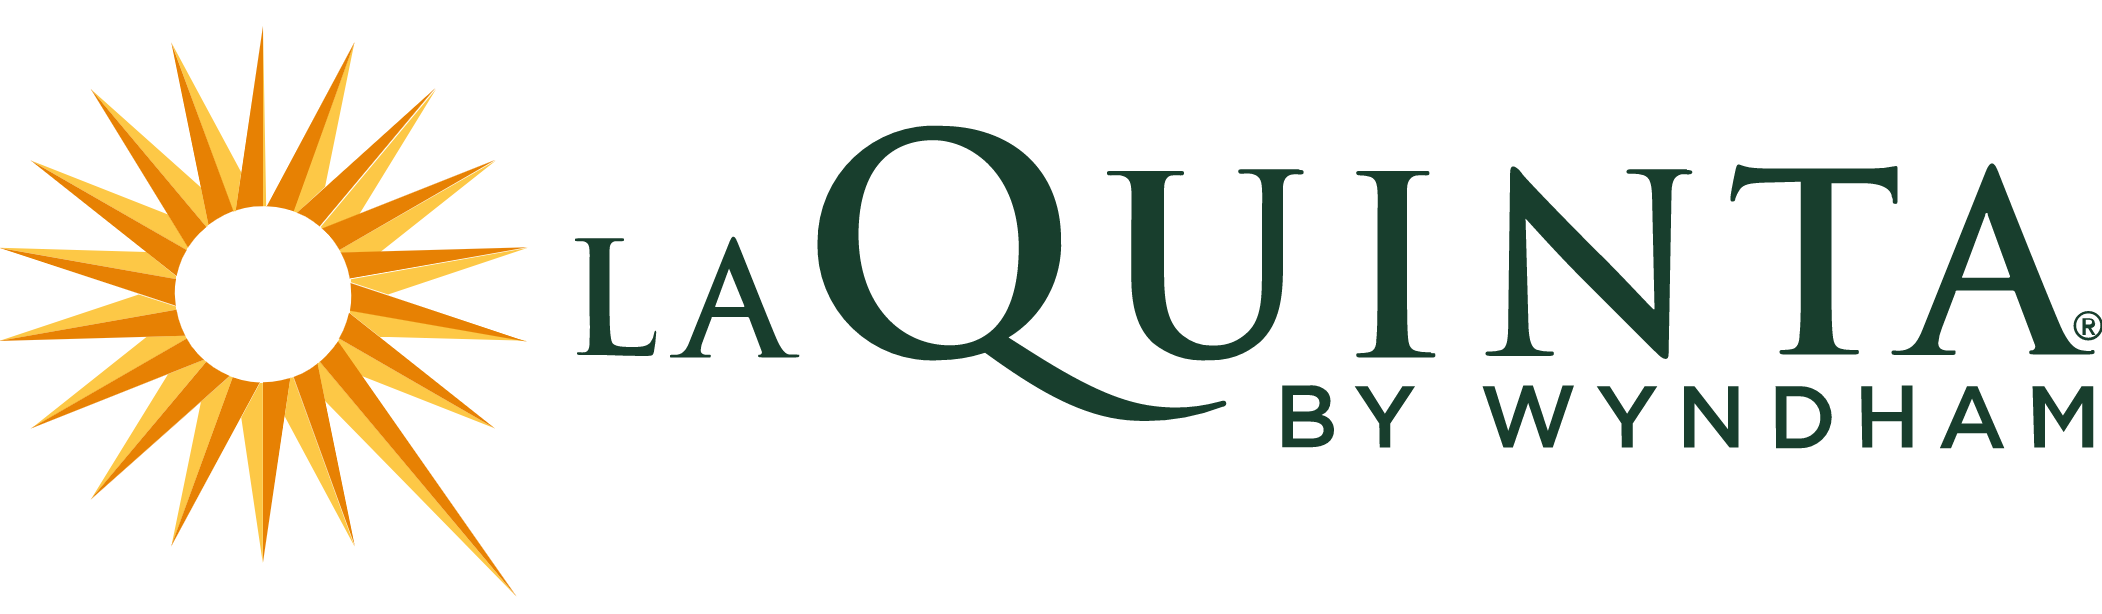 LaQuinta logo